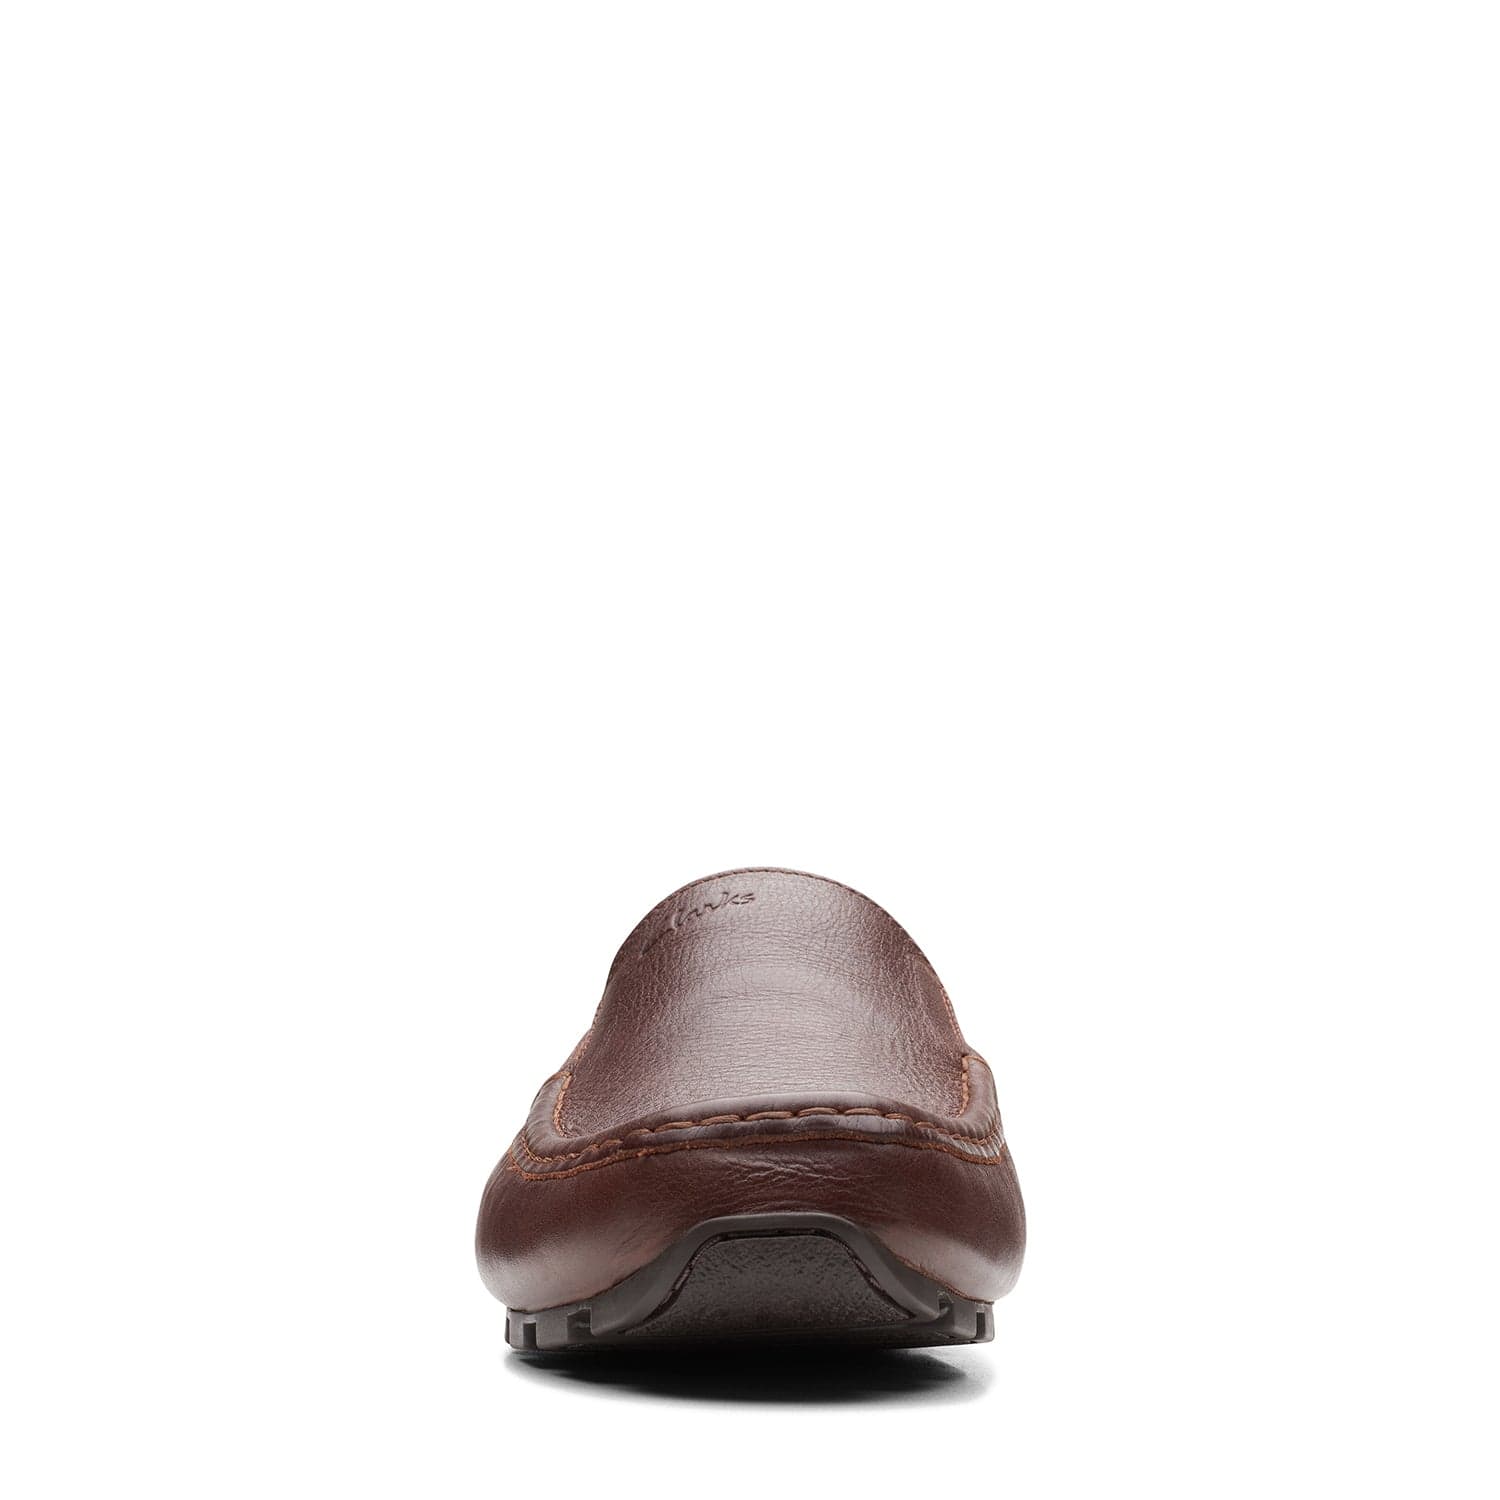 Clarks Oswick Plain - Shoes - Dark Tan Lea - 261666837 - G Width (Standard Fit)